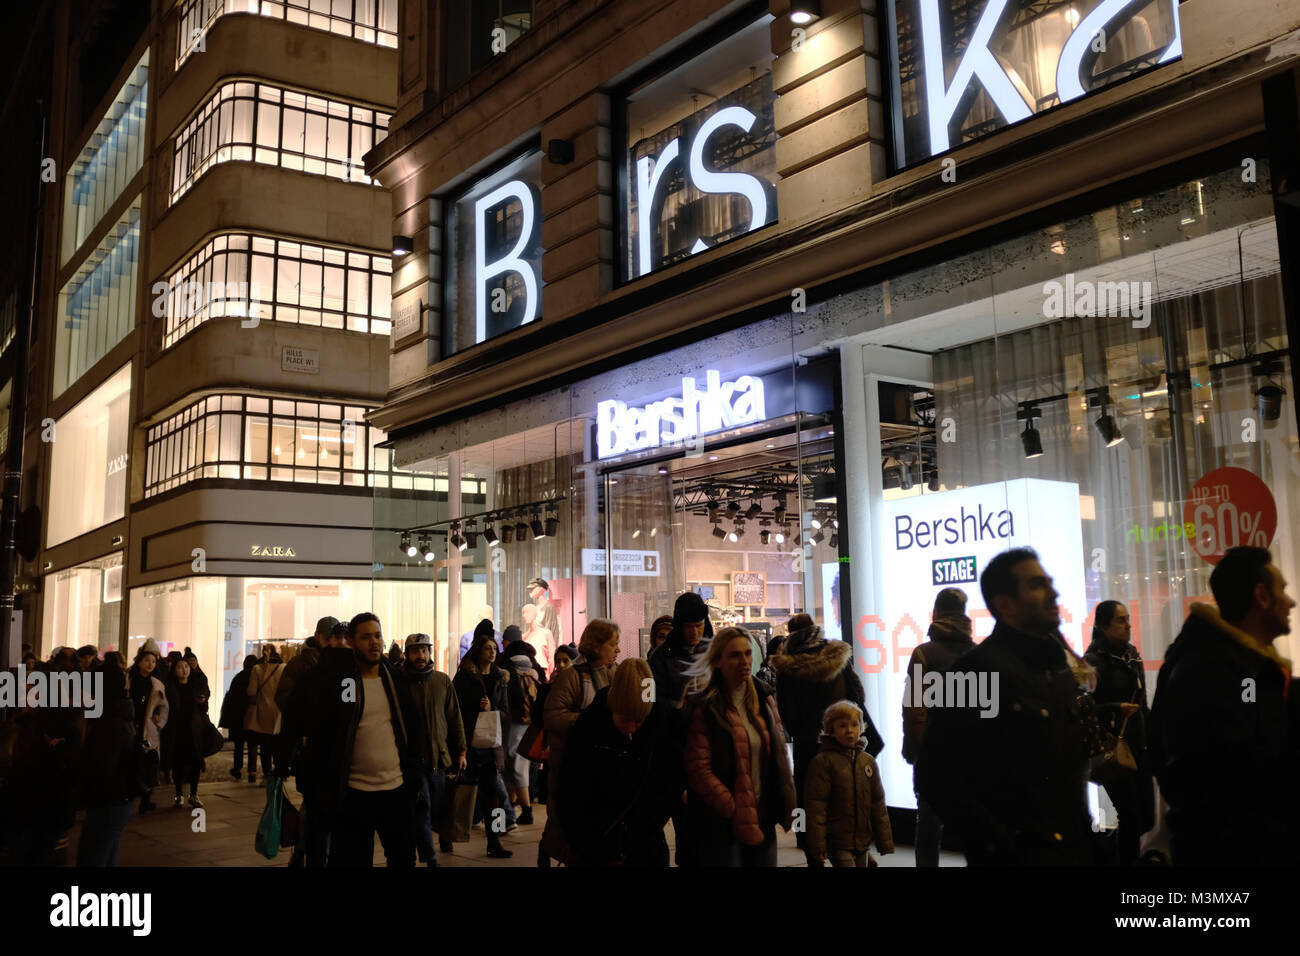 Bershka clothing store on Oxford Street, London, England, UK Stock Photo -  Alamy